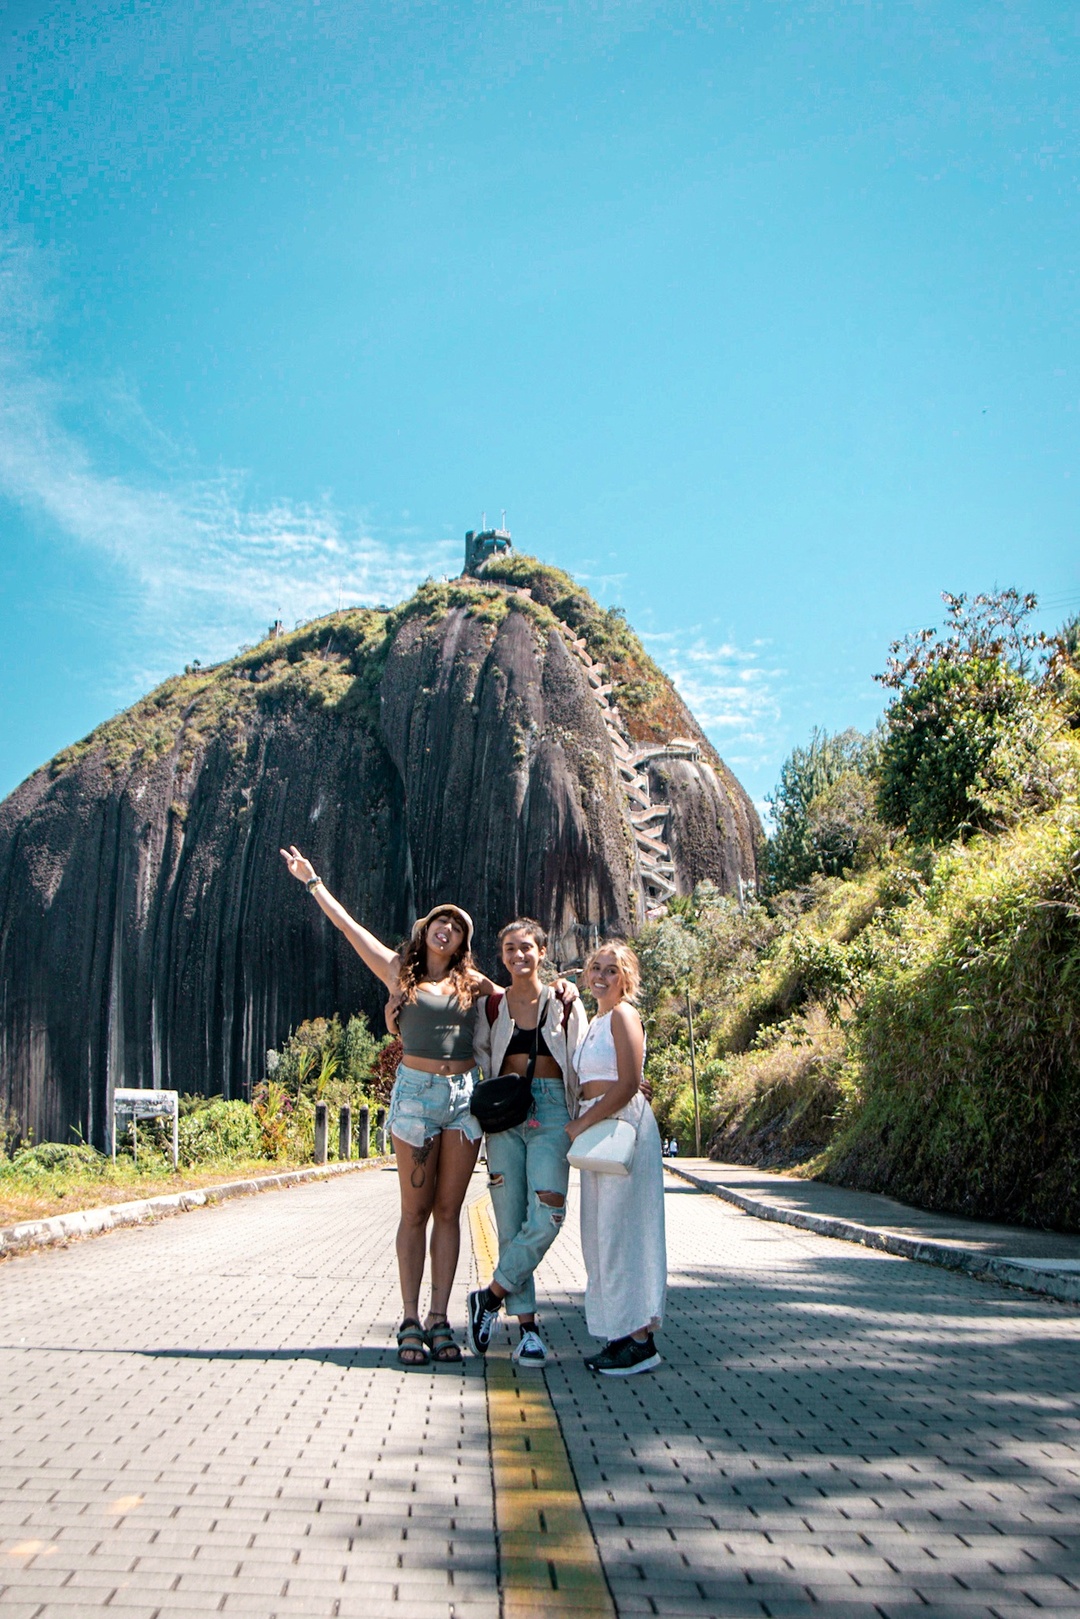 Explore Colombia’s Magic Destination on this 10-Day Tour